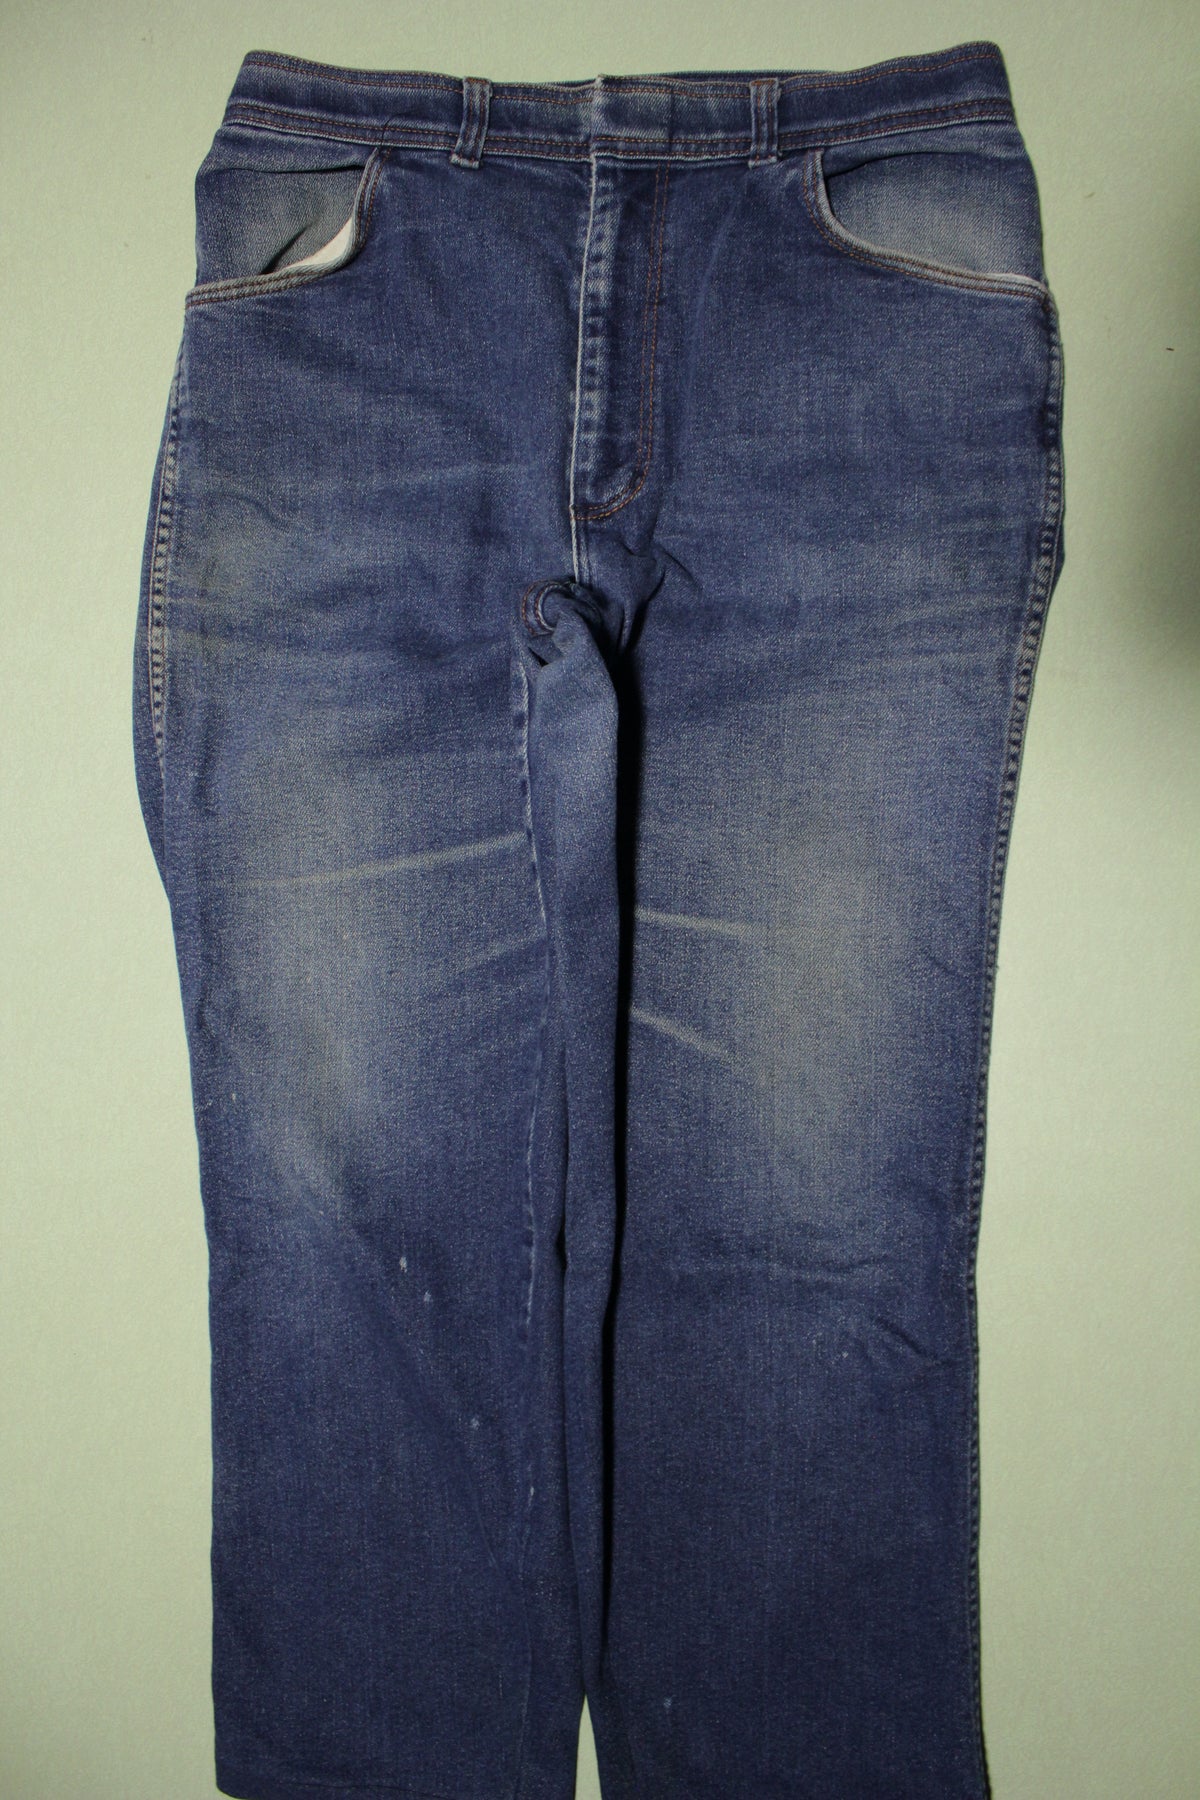 Sportabout Vintage 70's Blue Denim Dark Washed Jeans 30x25